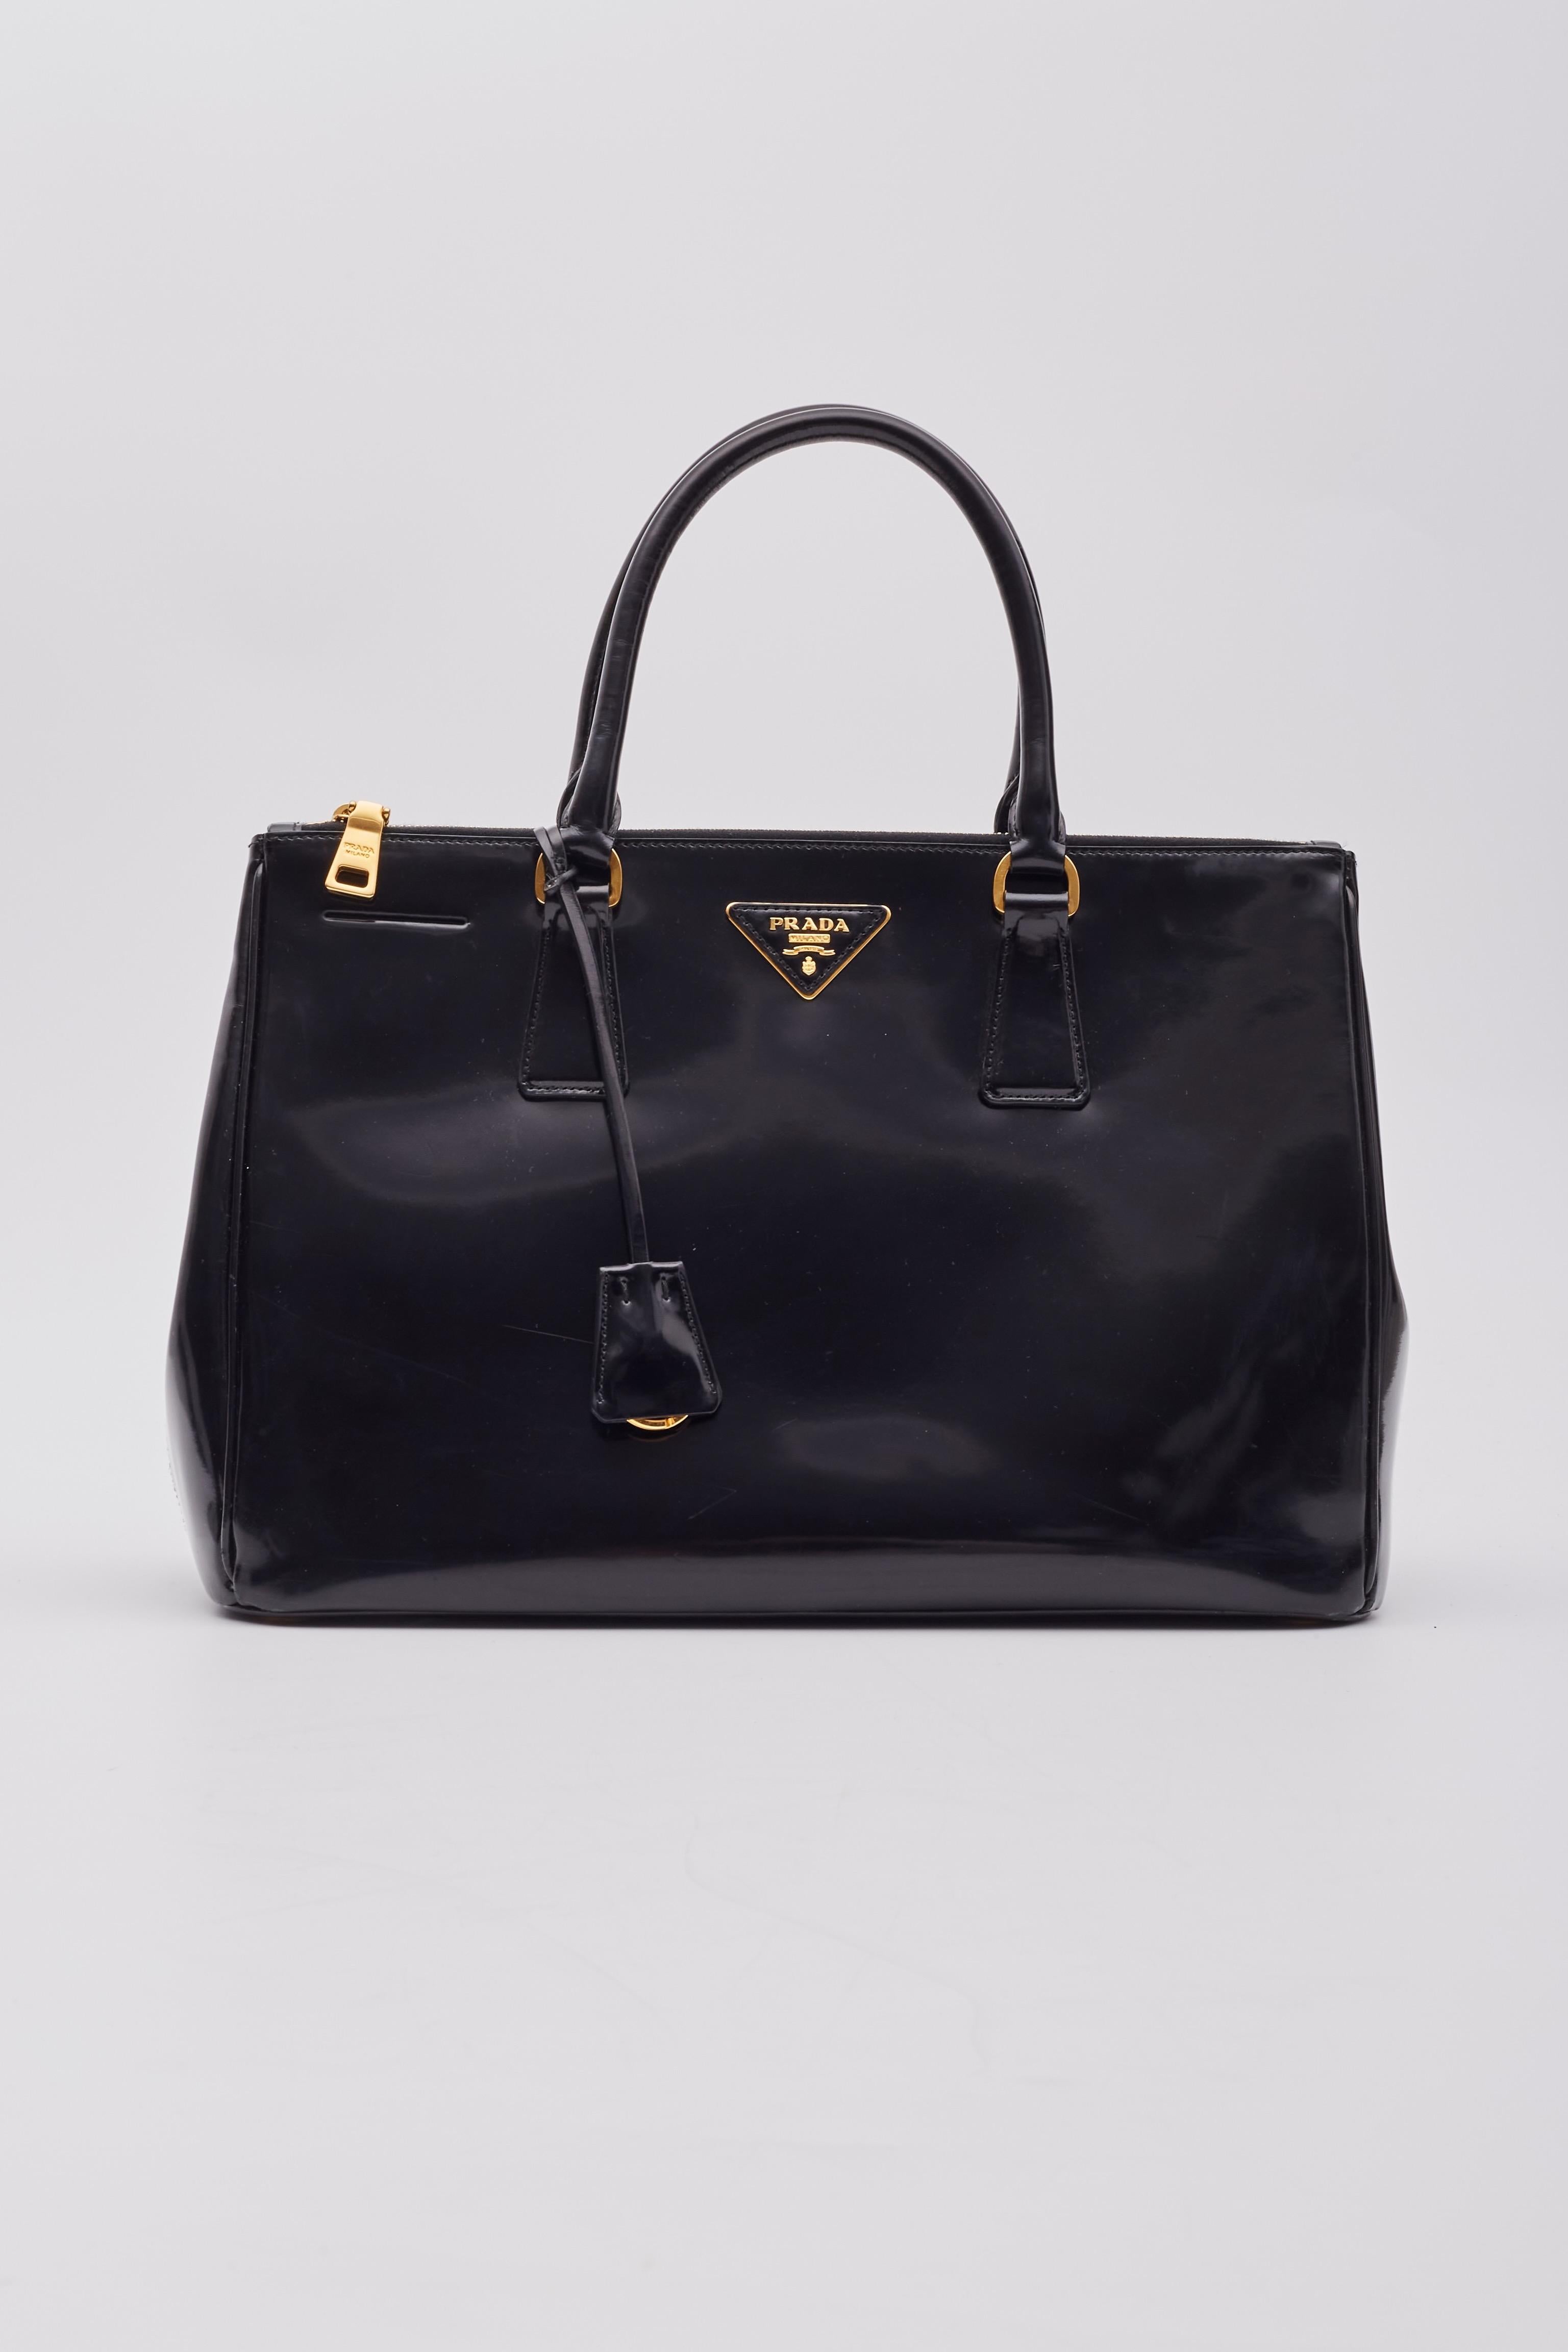 Prada Black Patent Leather Galleria Tote Bag For Sale 3